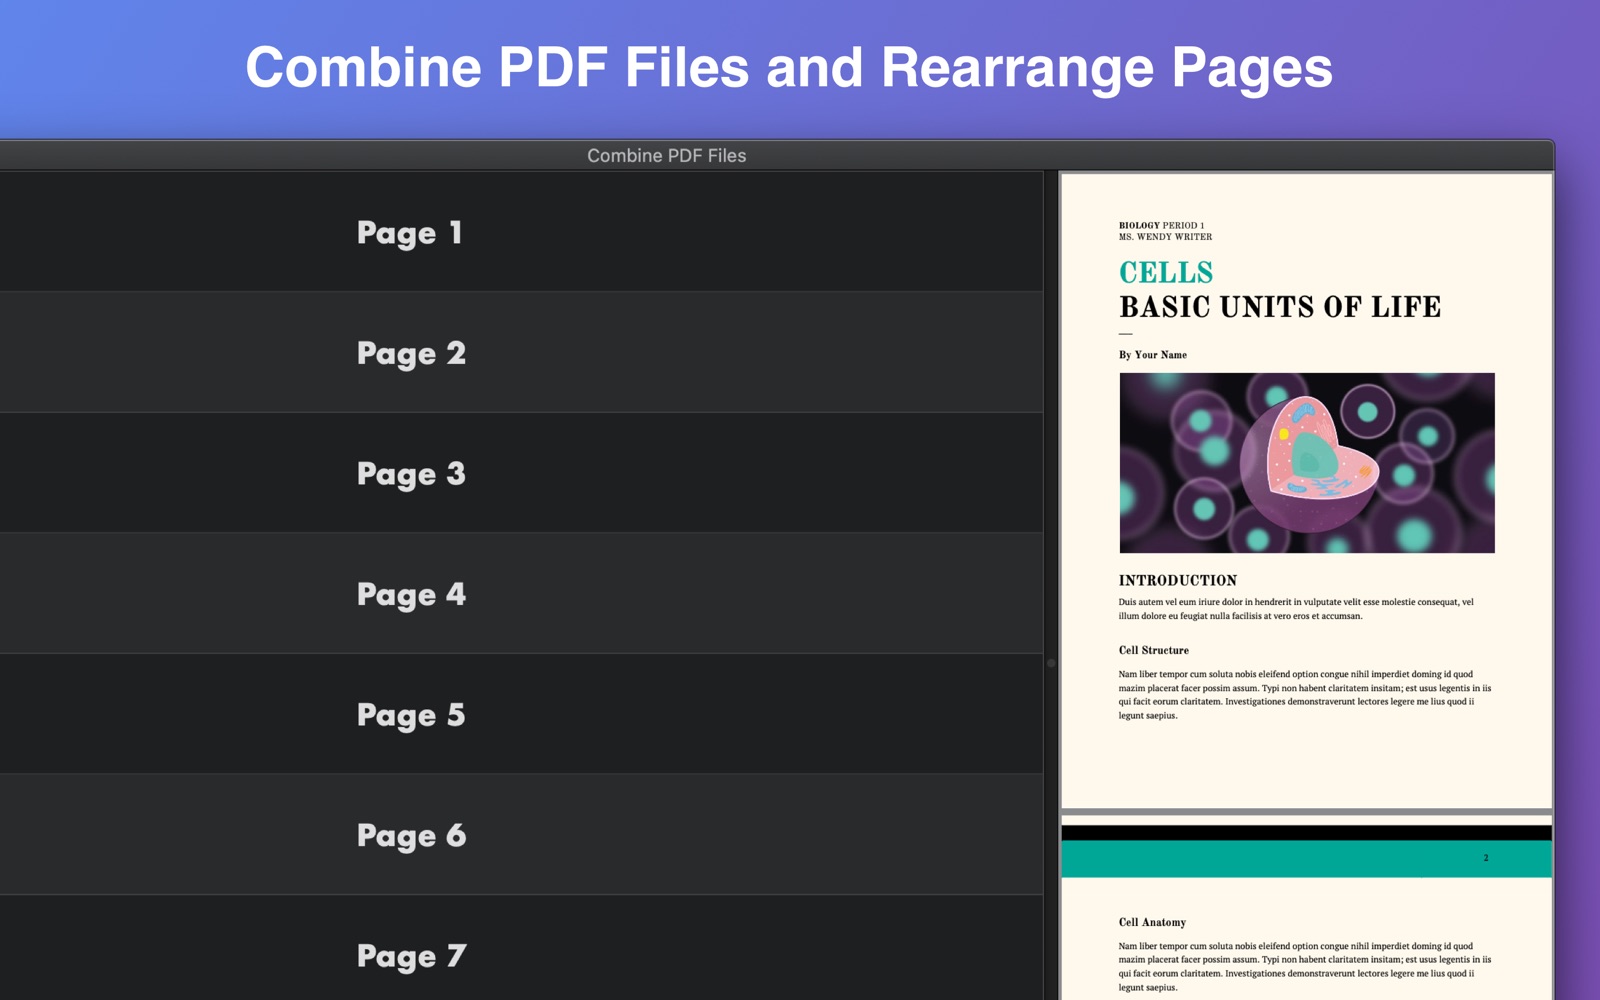 Combine PDF Files 1.2 : Main Window